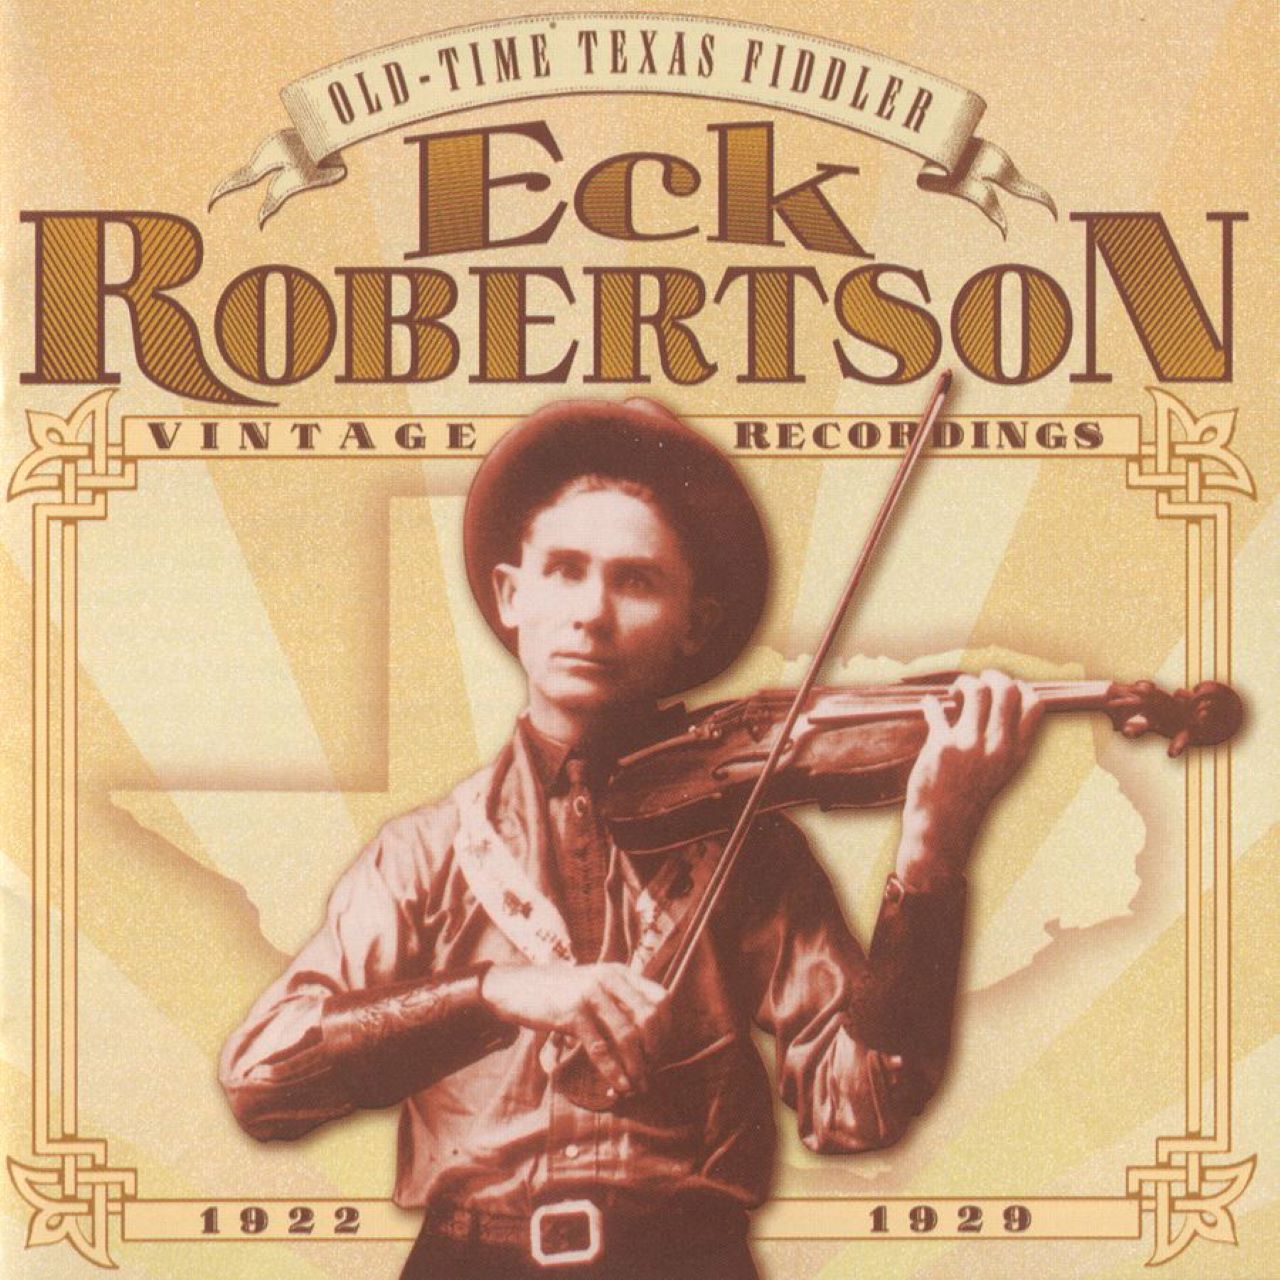 Eck Robertson - Old Time Texas Fiddler cover album